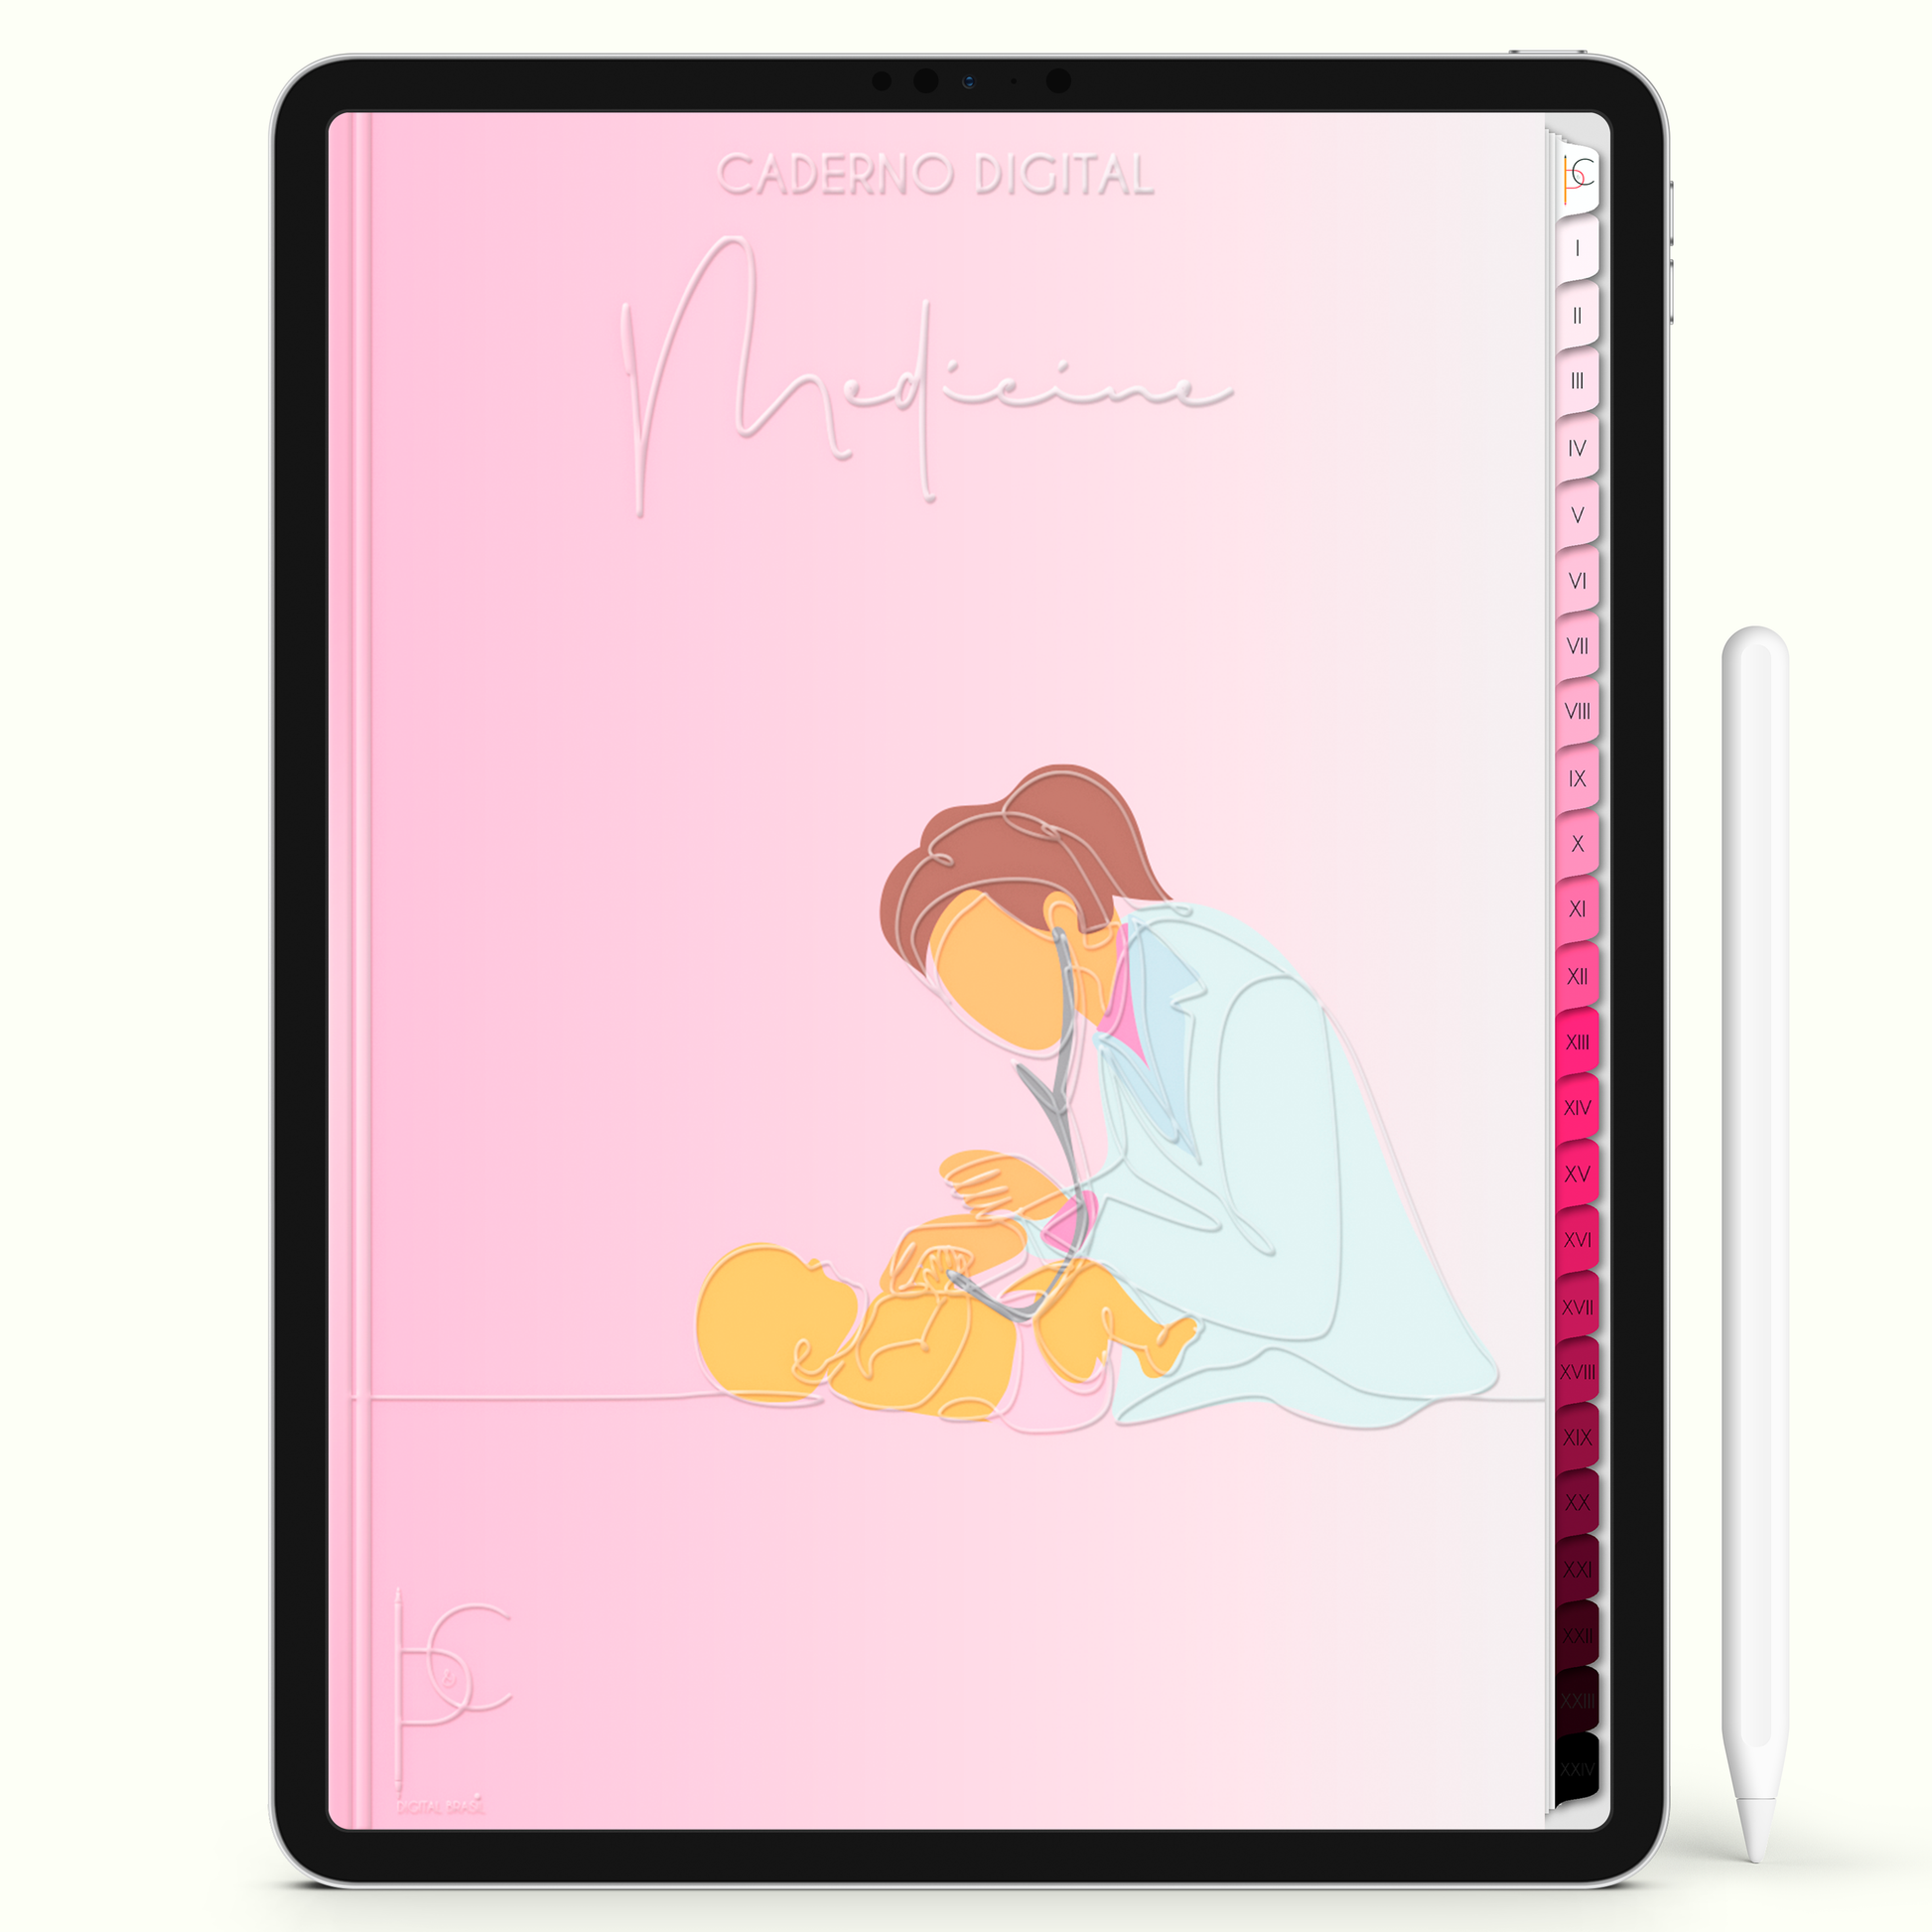 Caderno Digital Blush Escolhi Ser Pediatra 24 Matérias • iPad Tablet Android • Download instantâneo • Sustentável